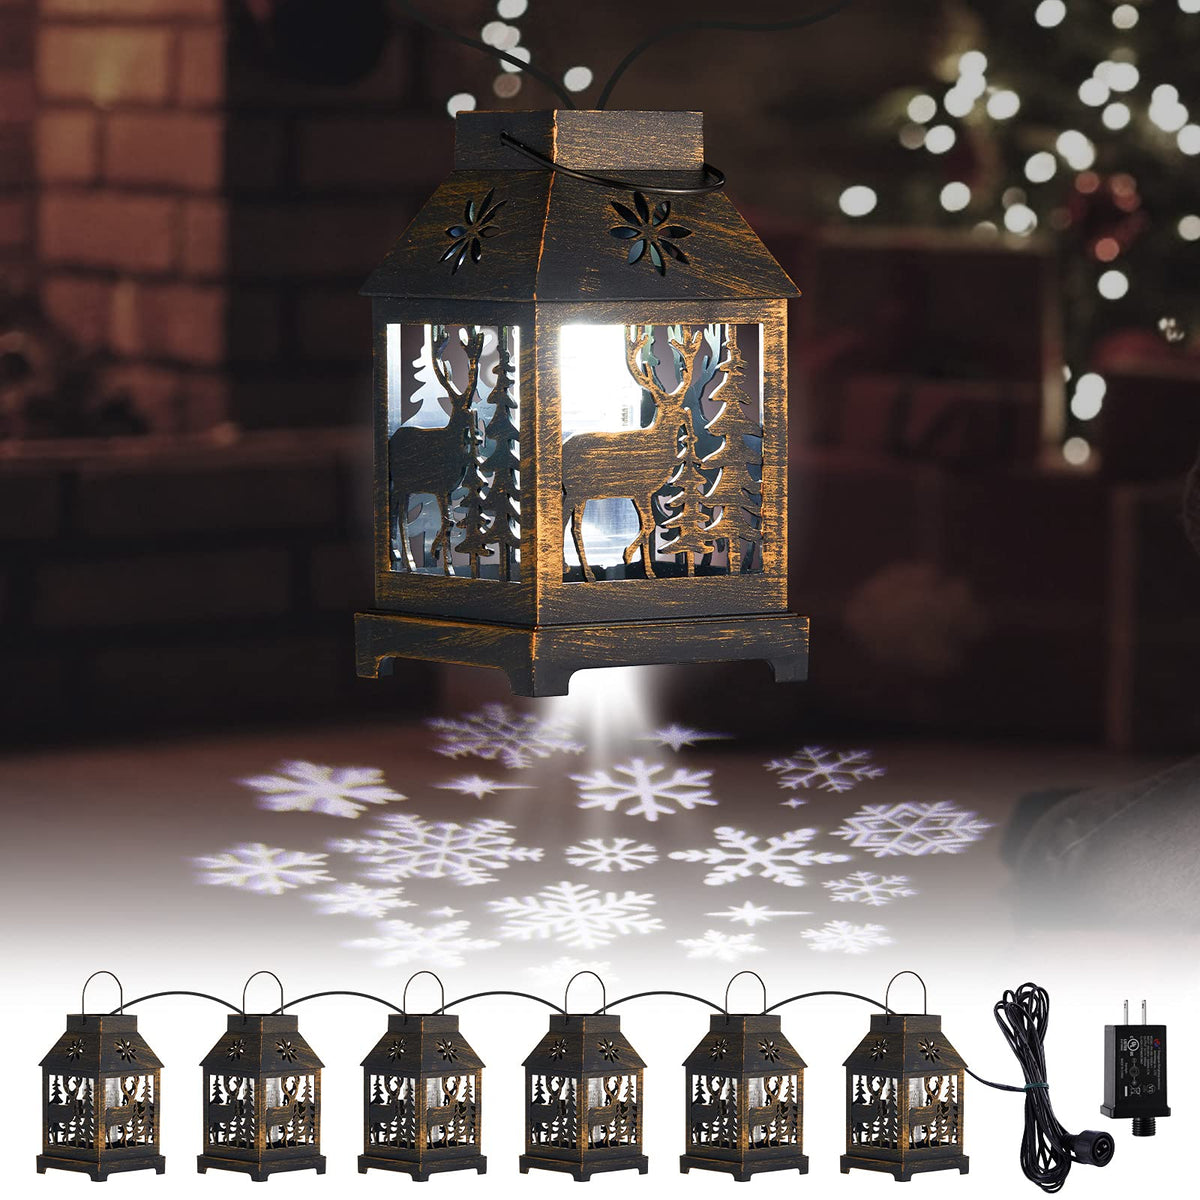 22.8 Feet / 6 Lanterns / Snowflake Projection